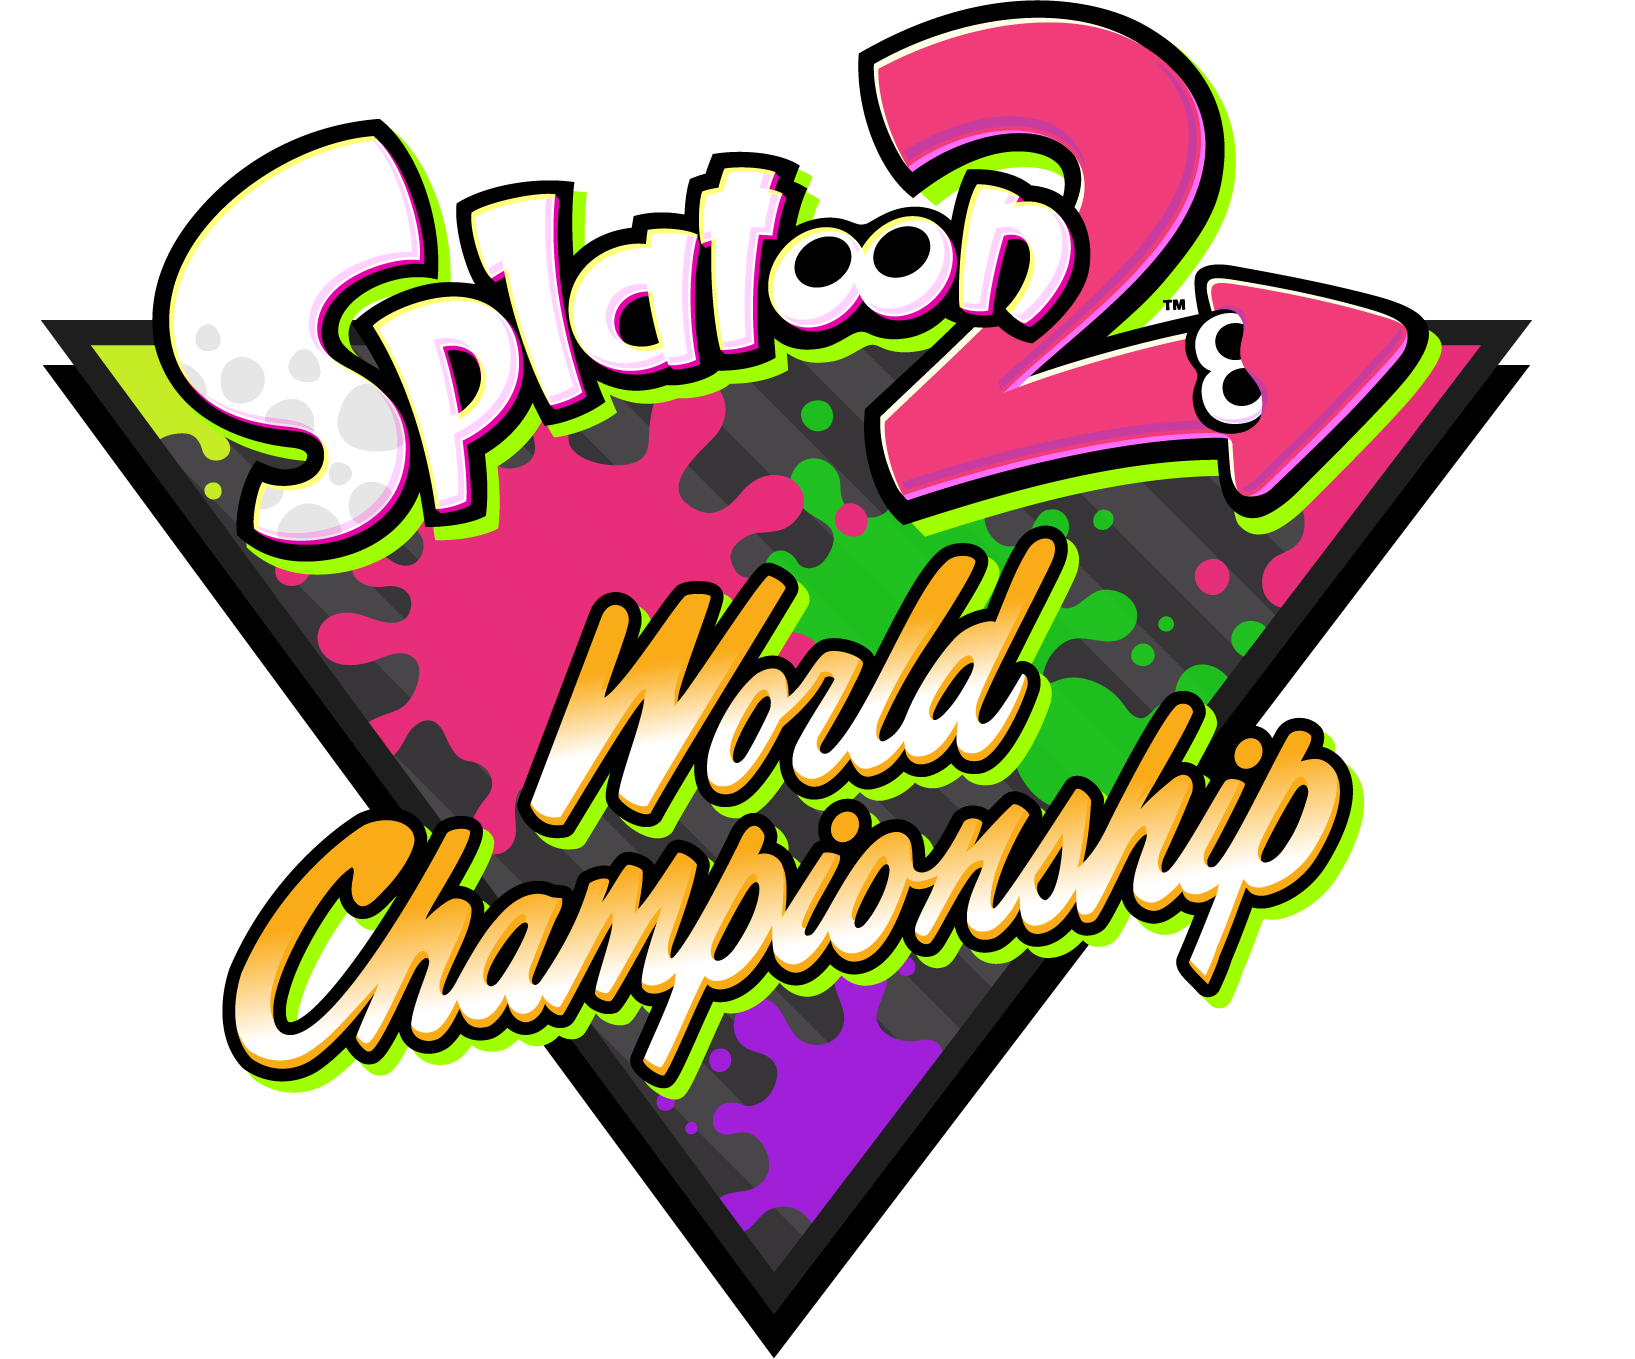 Splatoon 2 World Championship Splatoon Wiki FANDOM powered by Wikia